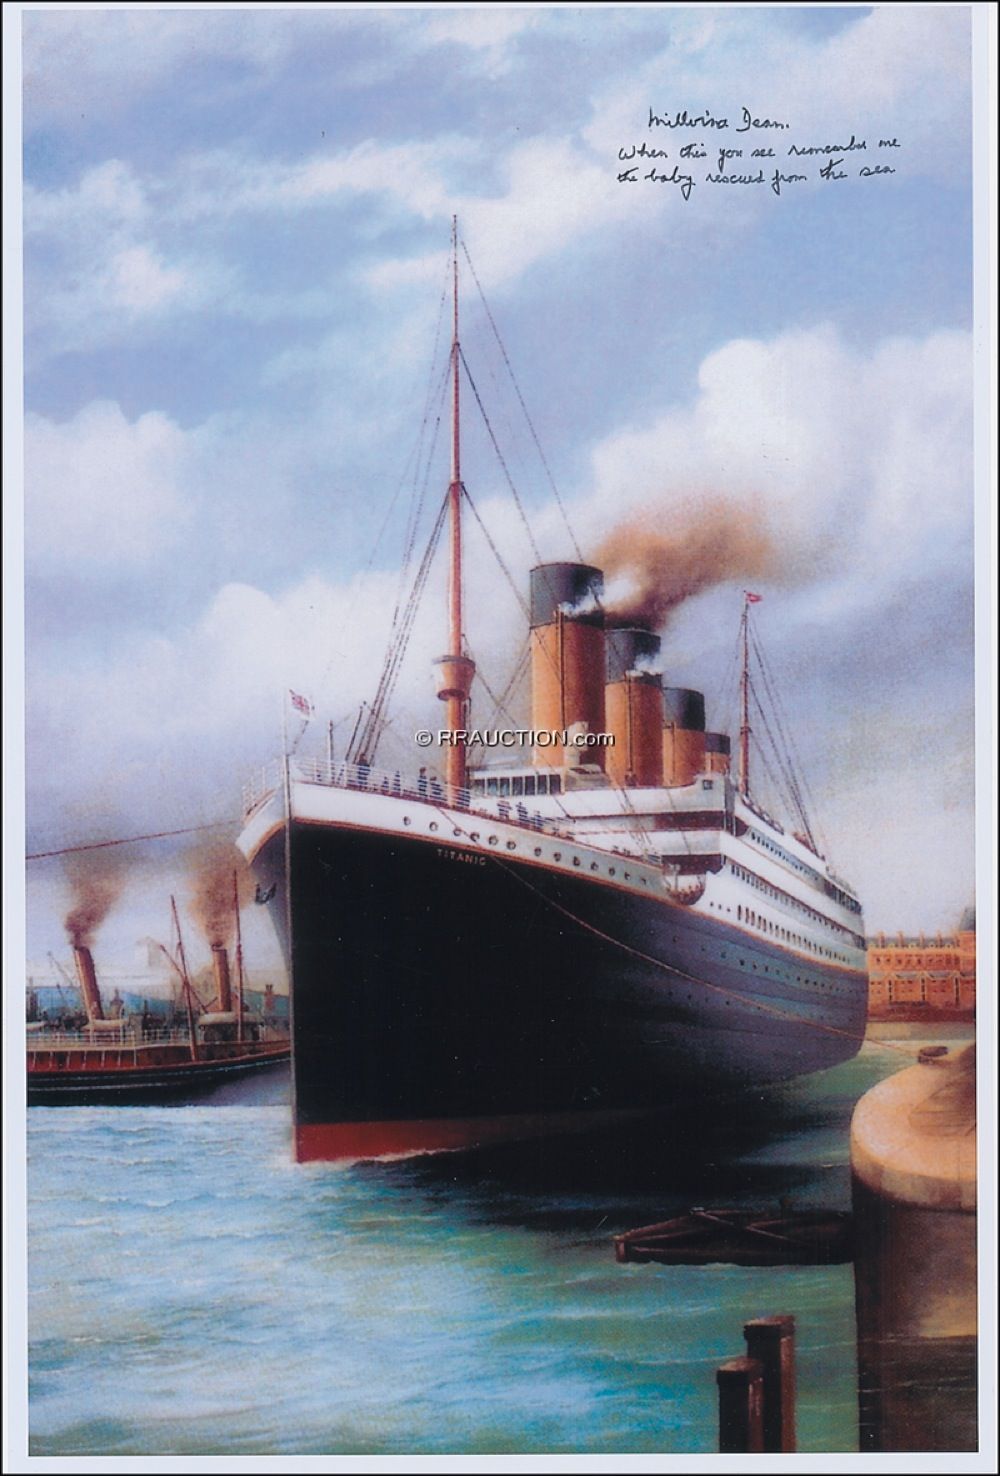 Lot #393 Titanic: Millvina Dean